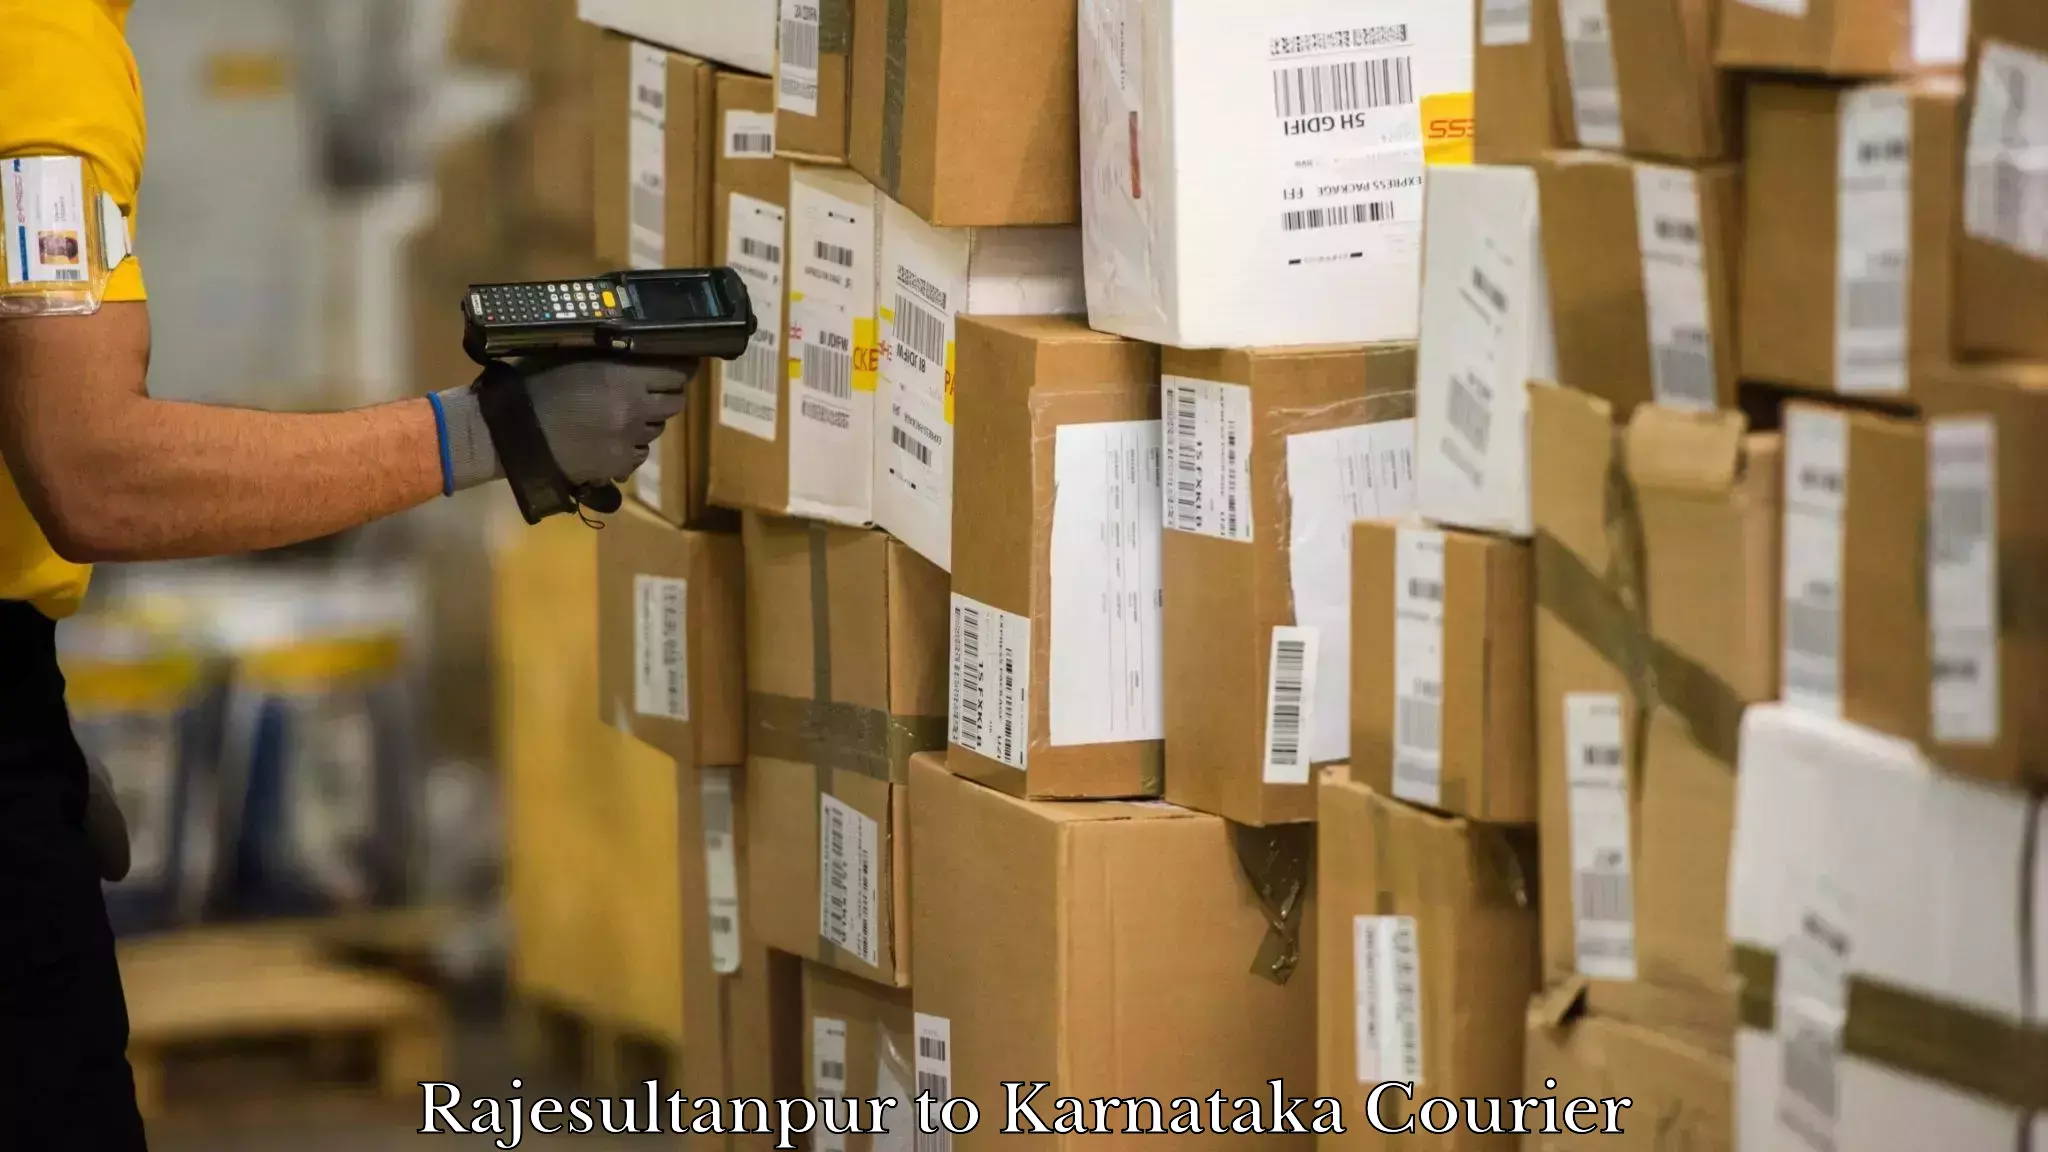 Nationwide shipping capabilities Rajesultanpur to Karnataka